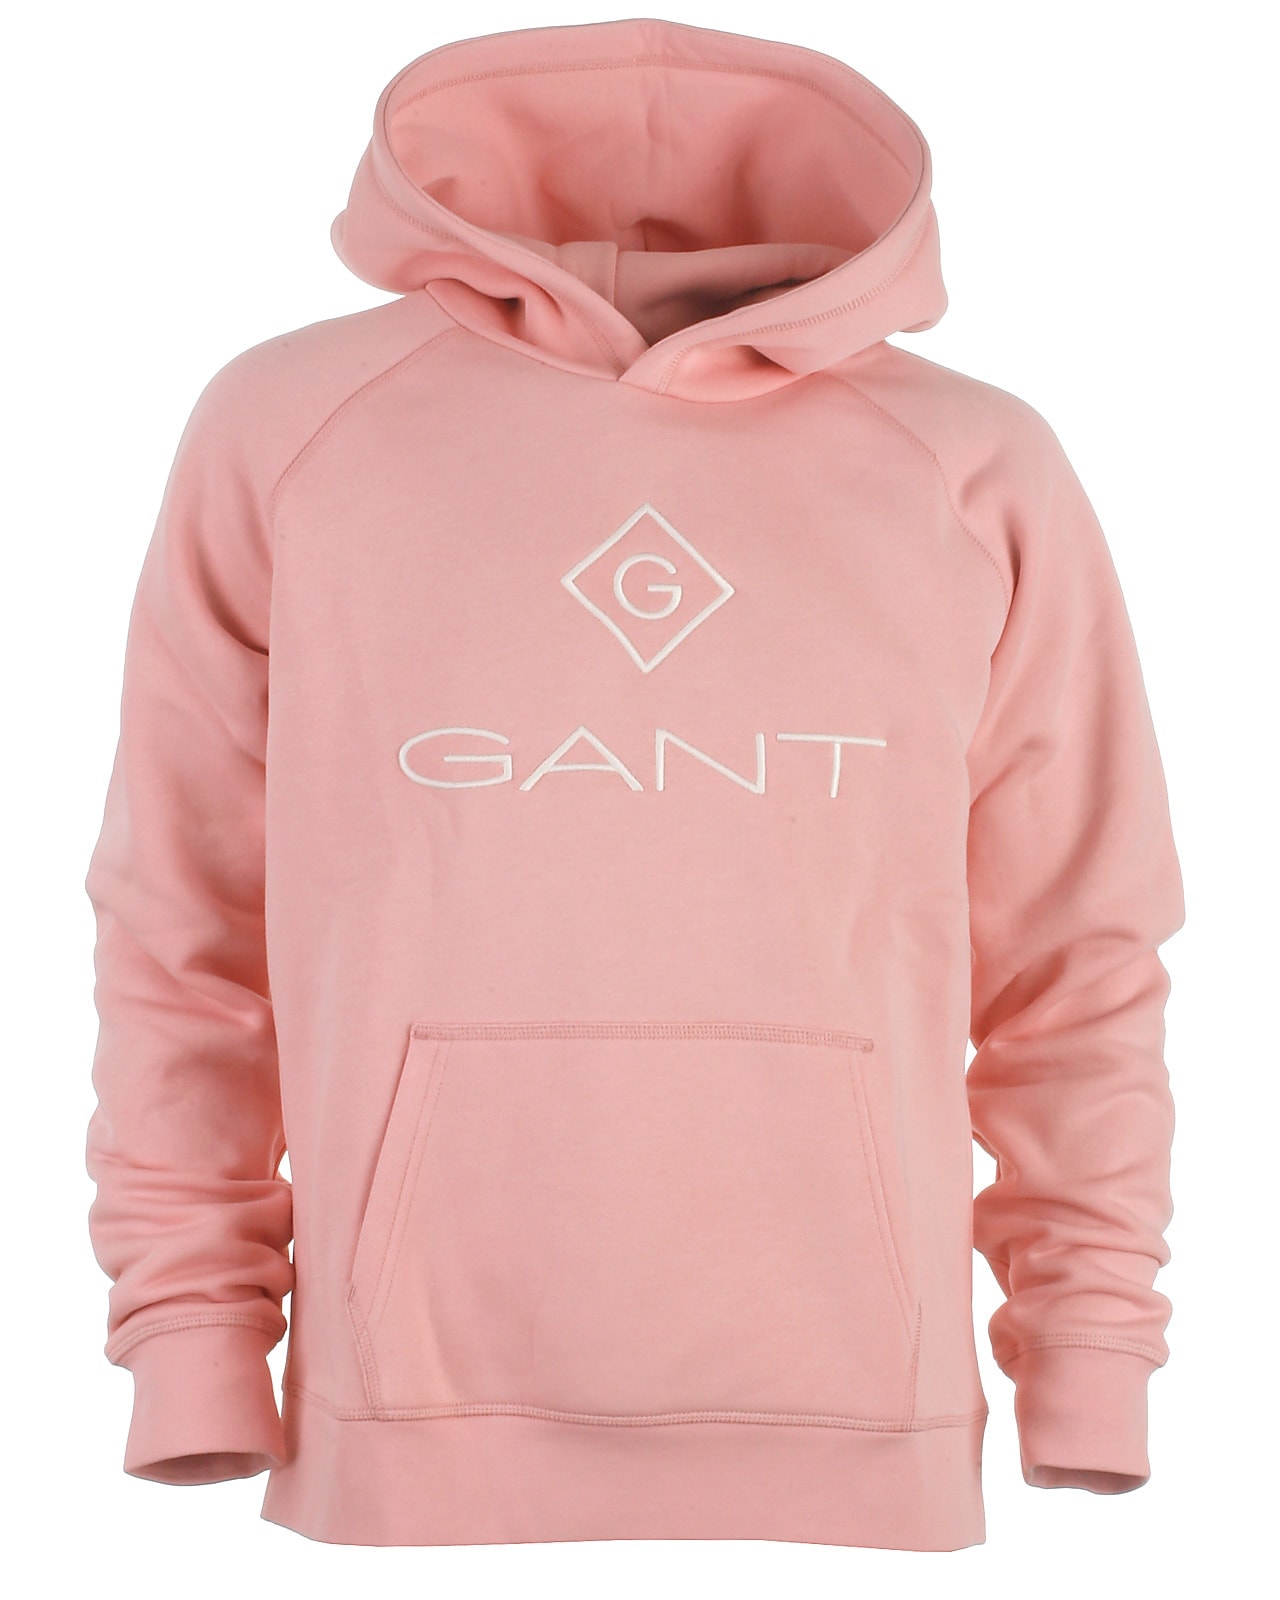 Se Gant hood sweat, Lockup, quartz pink - 140,134/140 hos Umame.dk